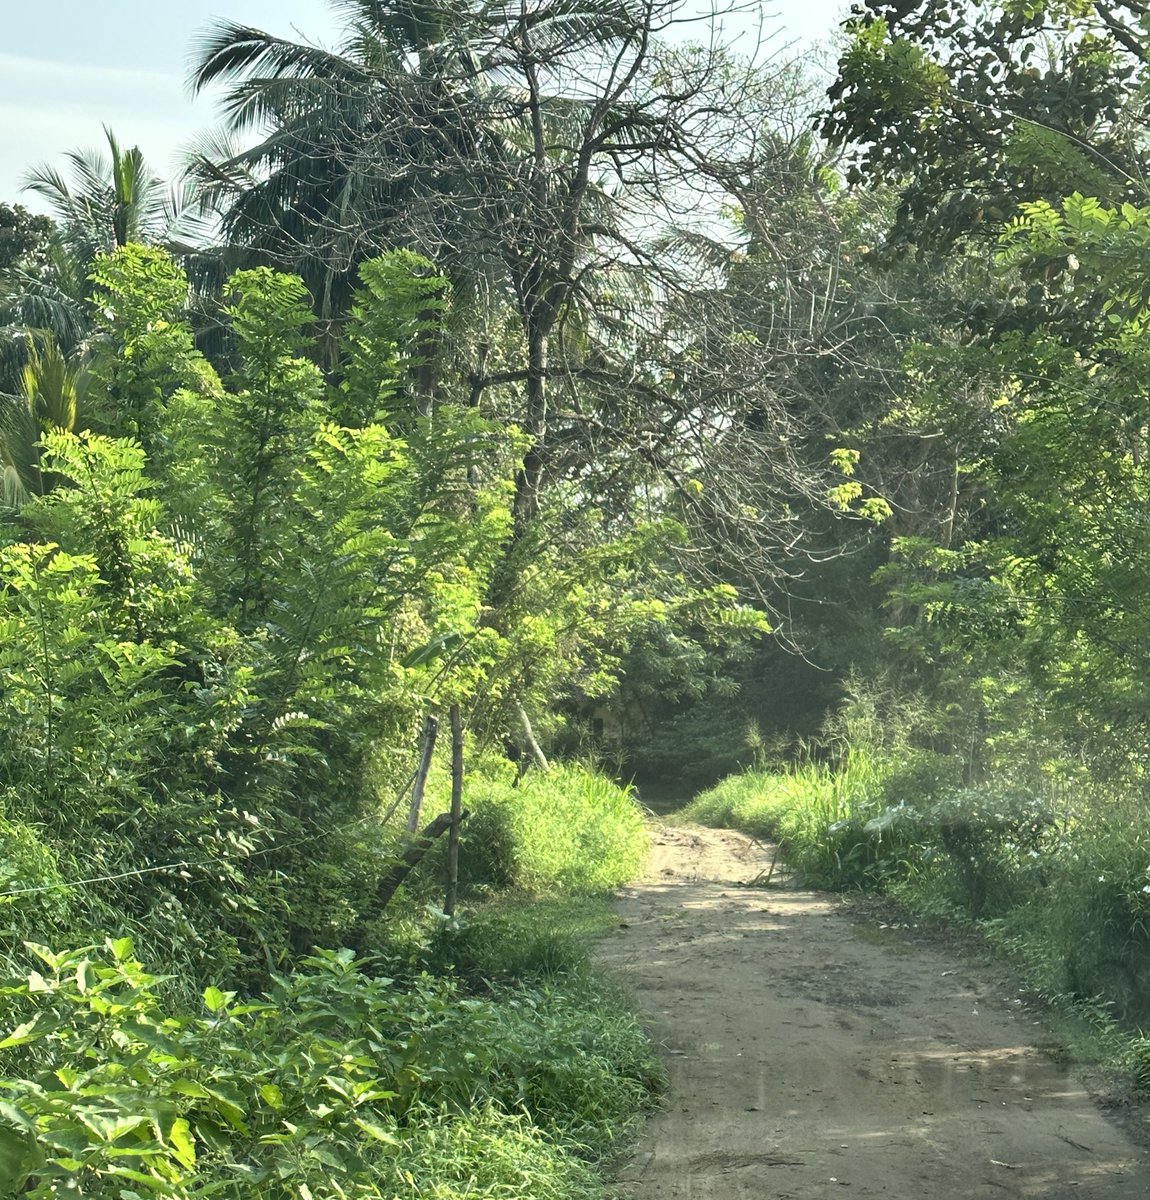 Pathway to the Rideemaliyadda Office. 😍

#offthebeatenpath #jungle #rideemaliyadda #uva #srilanka #lk #fieldvisit